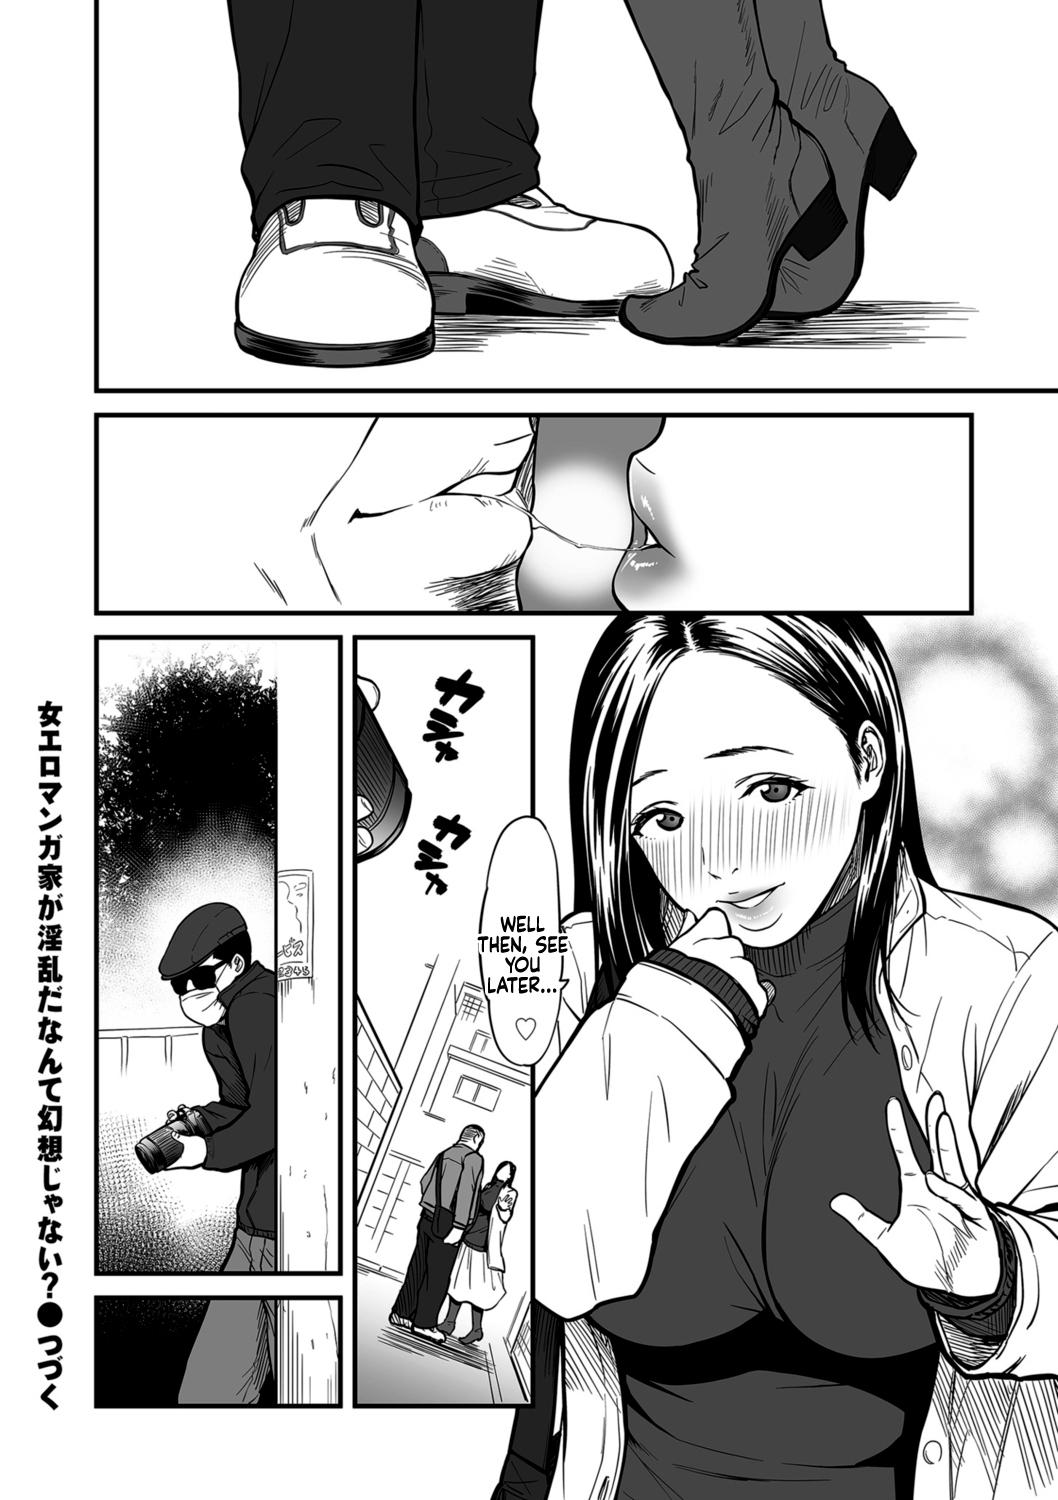 [Tsuzura Kuzukago] Onna Eromangaka ga Inran da nante Gensou ja nai? 1-7 | Is It Not a Fantasy That The Female Erotic Mangaka Is a Pervert? 1-7 [English] [Coffedrug] 105